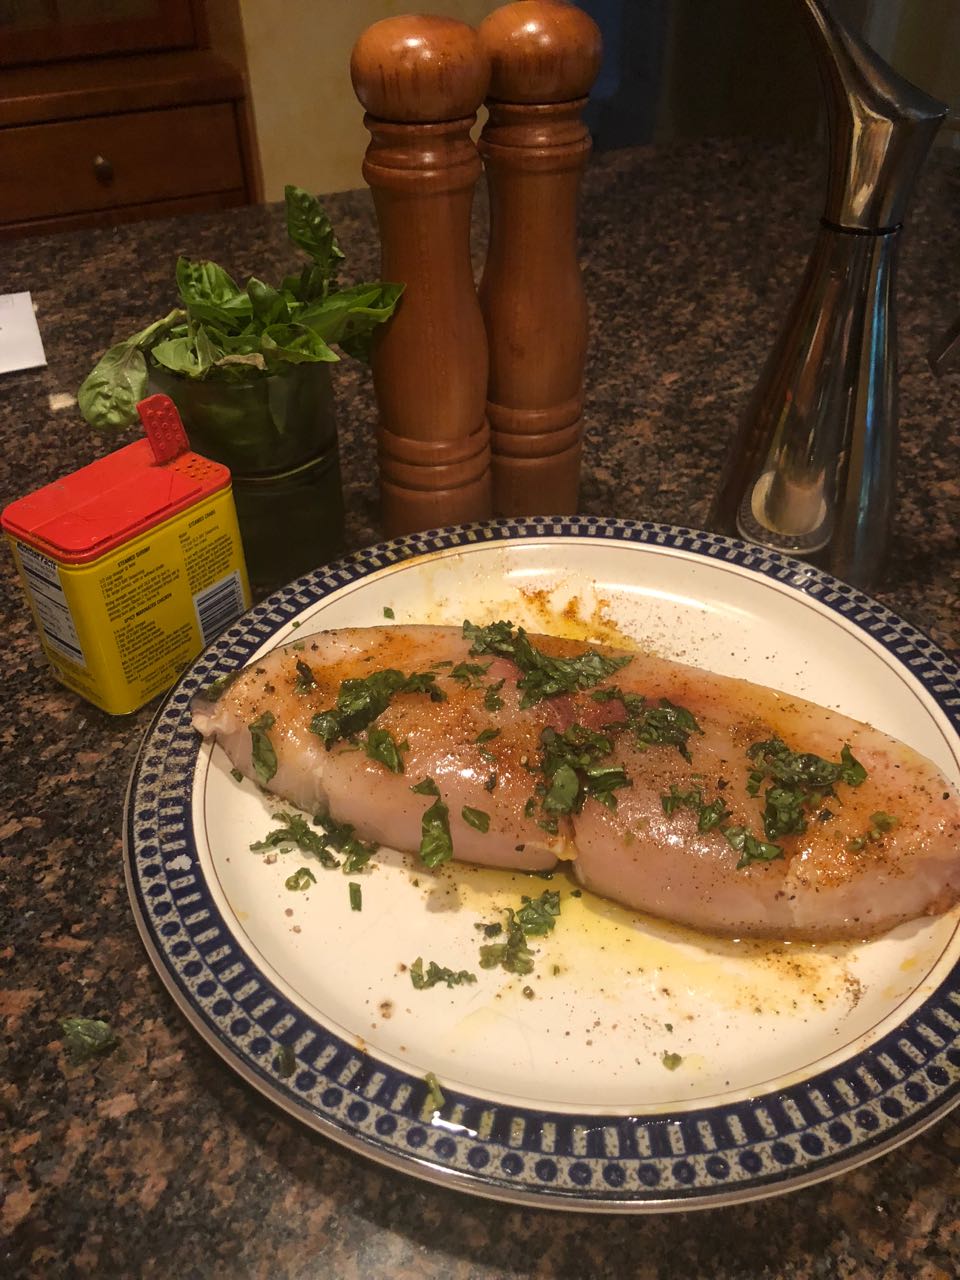 swordfish steak with marinade